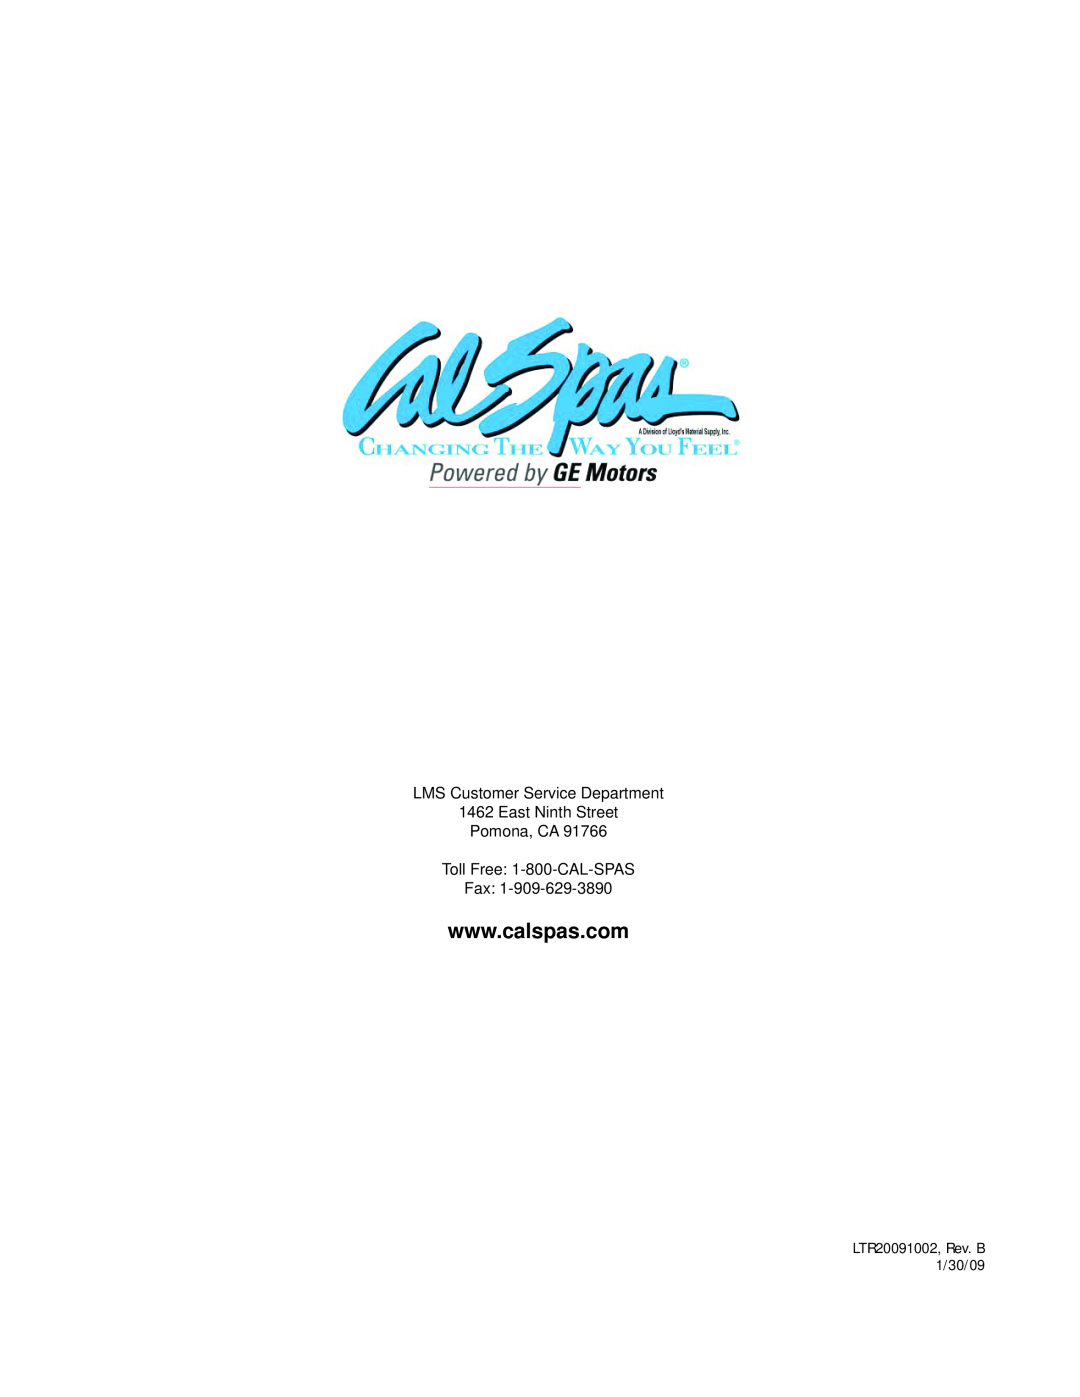 Cal Spas LTR20091002 manual LMS Customer Service Department, East Ninth Street Pomona, CA, Toll Free 1-800-CAL-SPAS Fax 